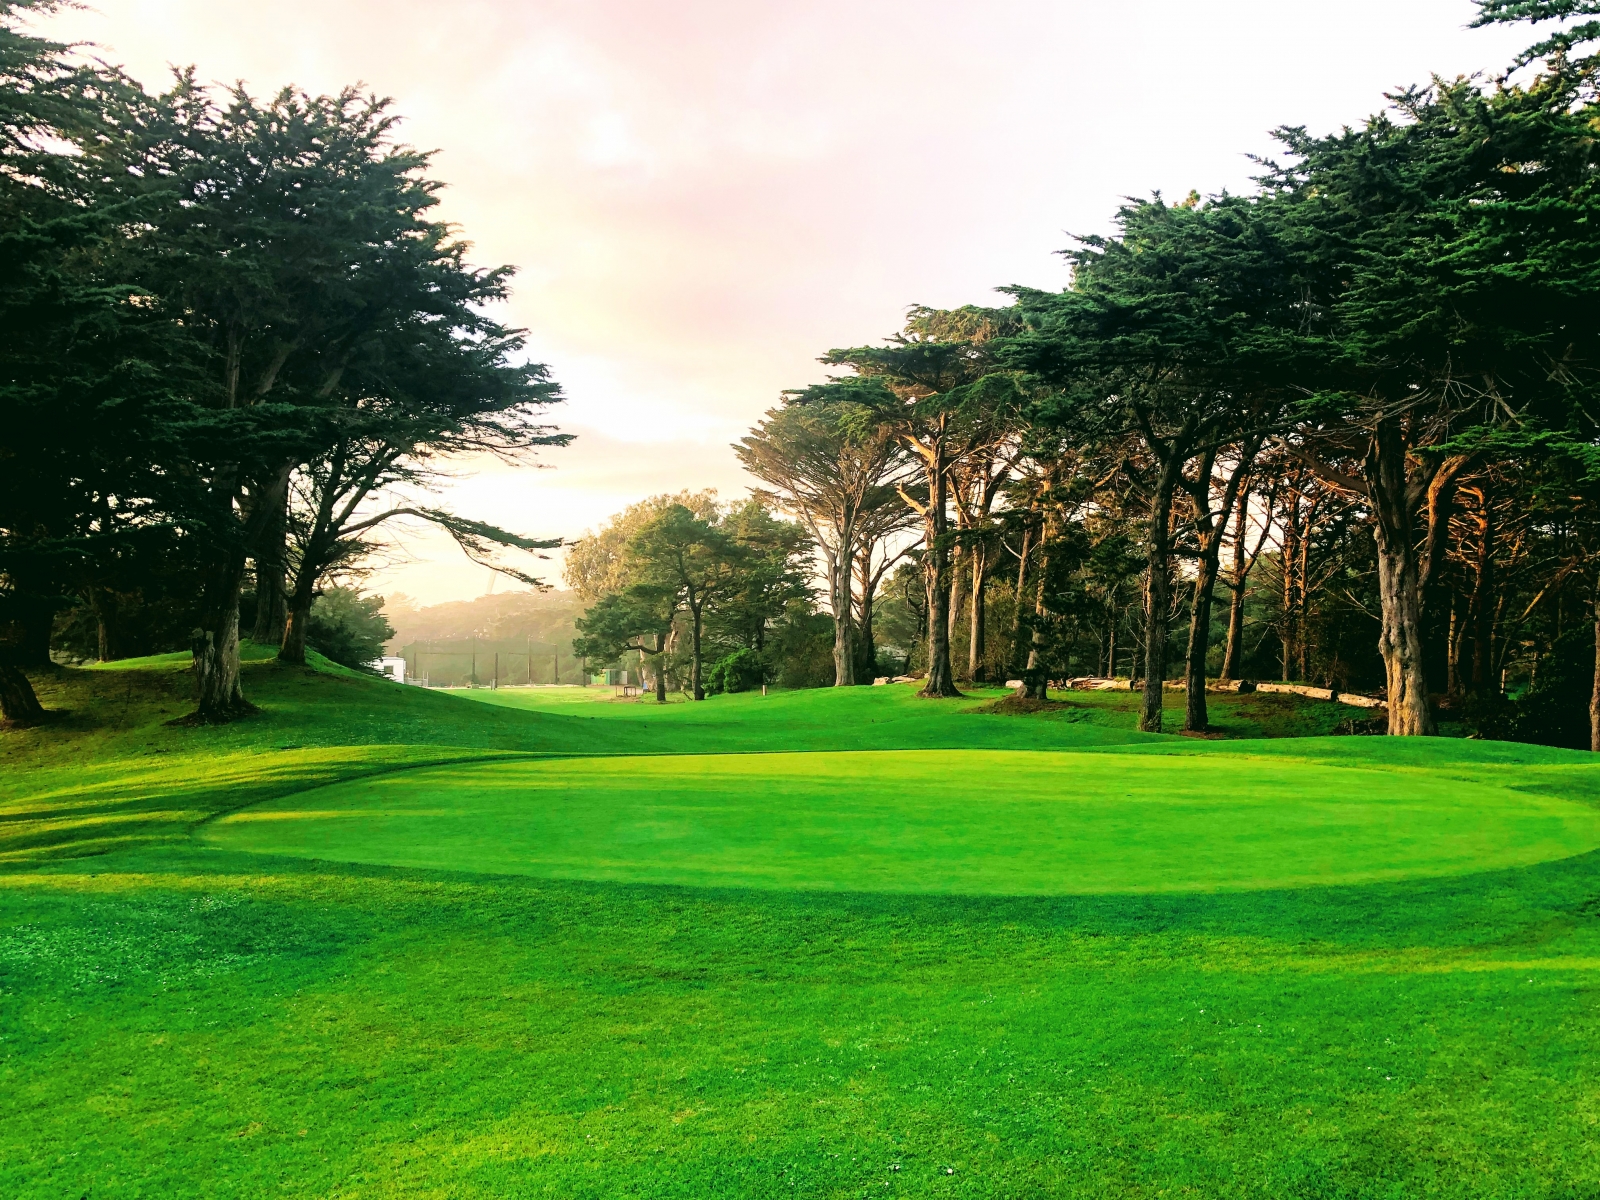 Golden Gate Park Golf CourseLogo